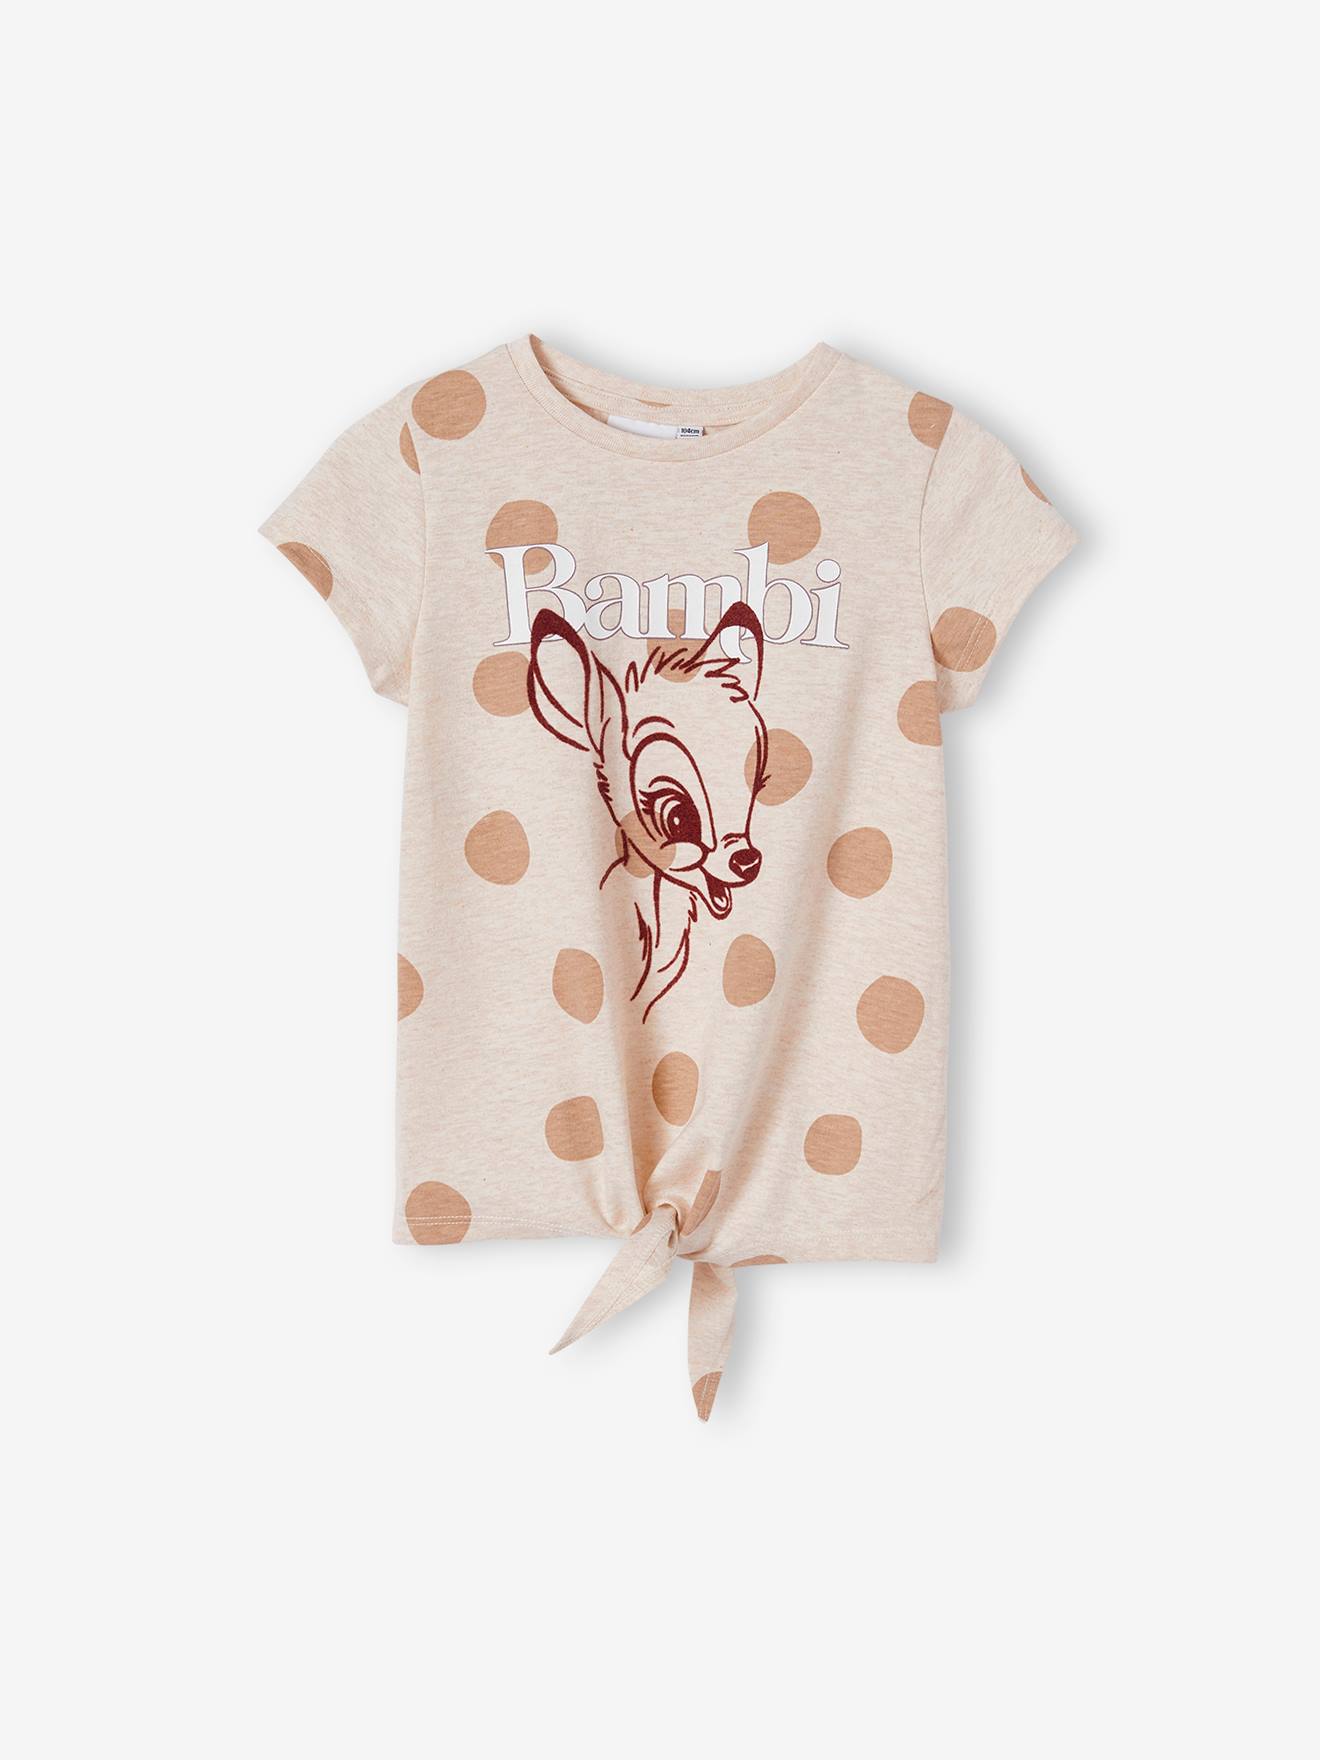 Bambi T-Shirt for Girls by Disney® - marl beige, Girls